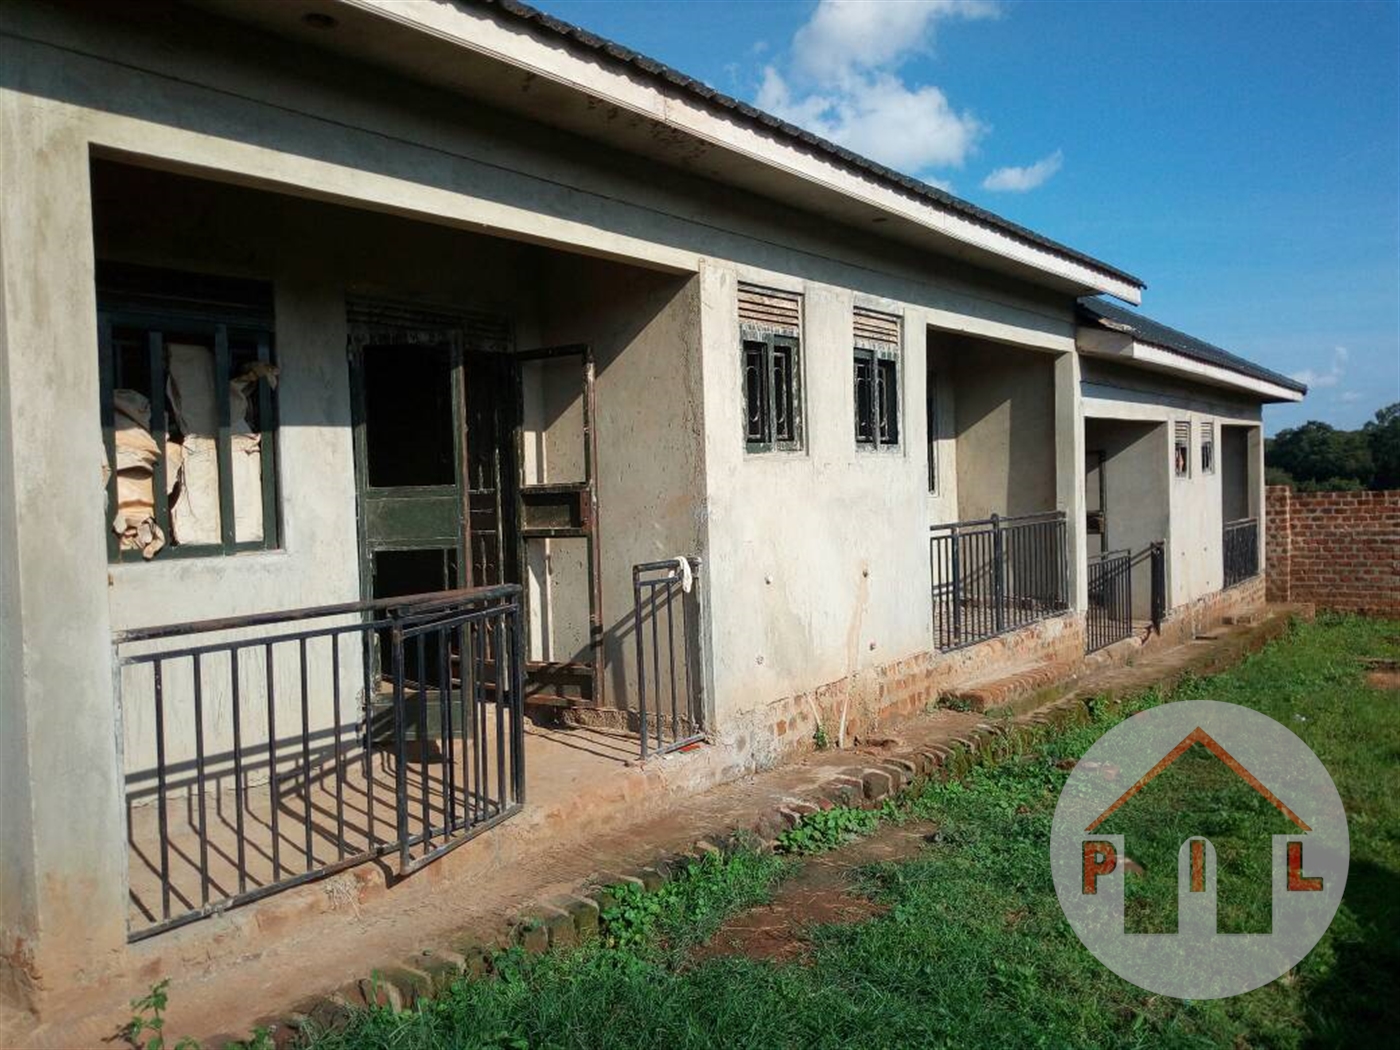 Rental units for sale in Gayaza Wakiso